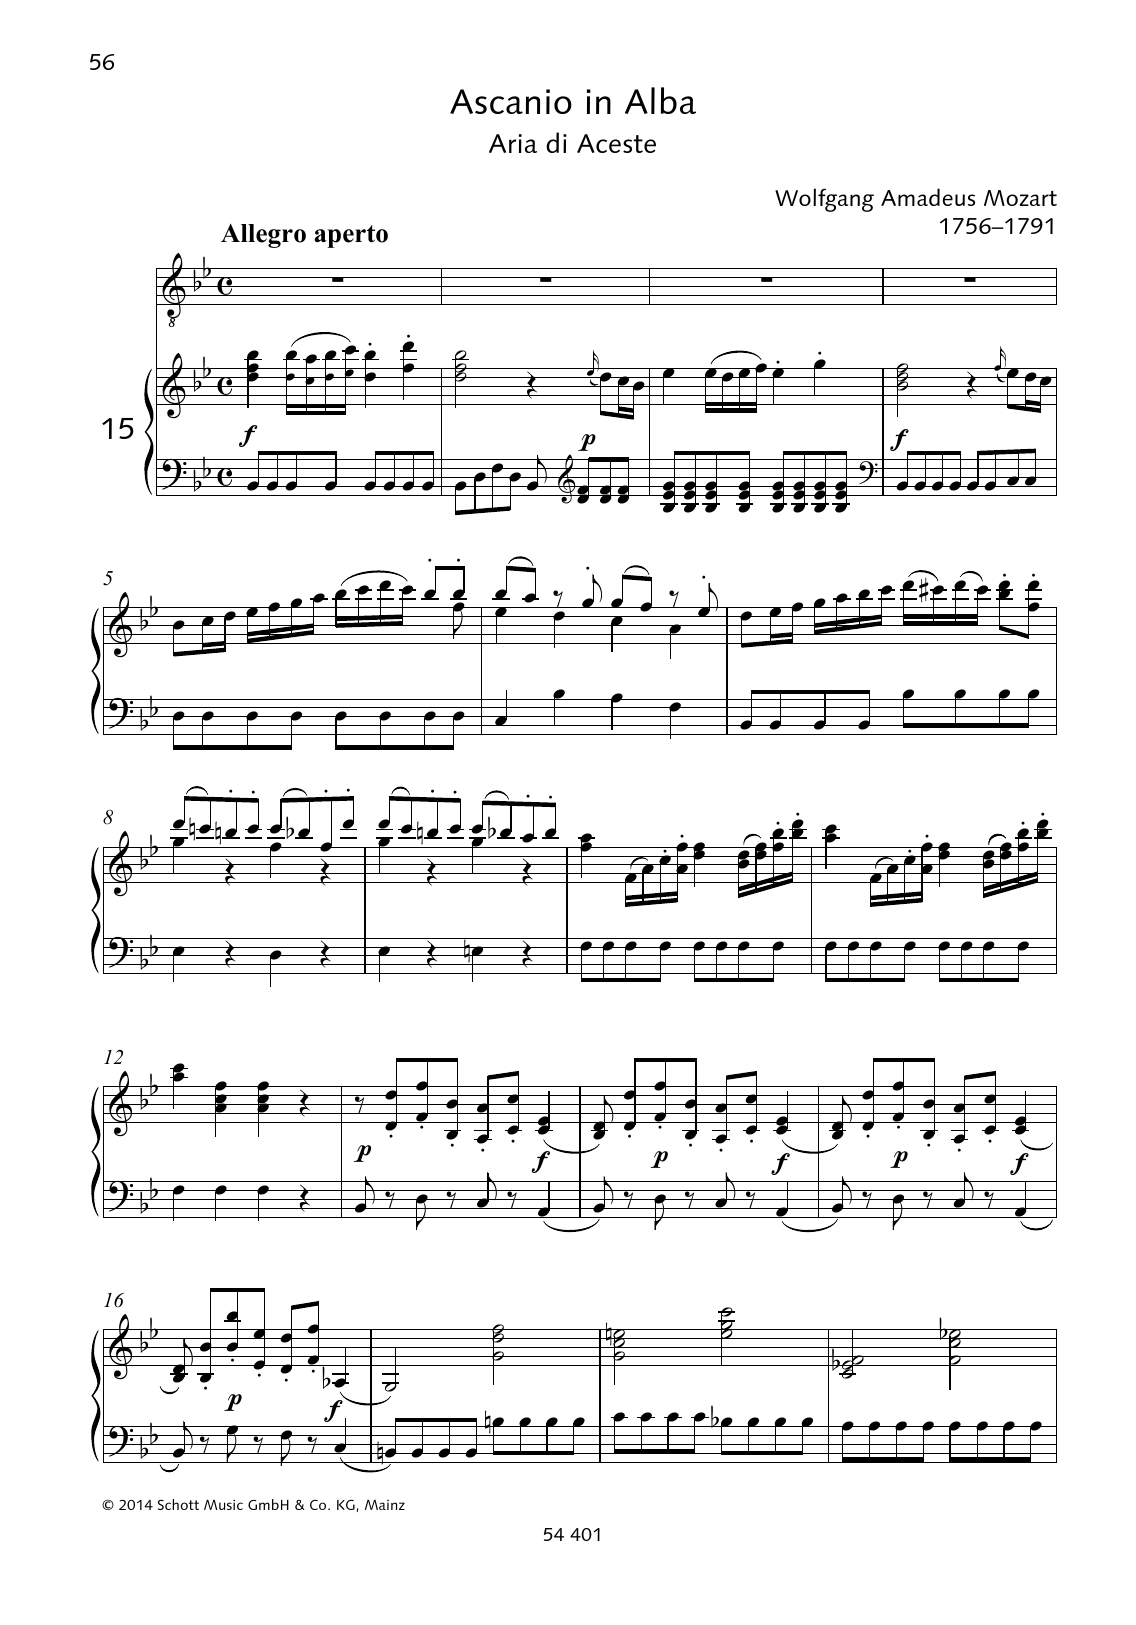 Download Wolfgang Amadeus Mozart Per la gioia in questo seno Sheet Music